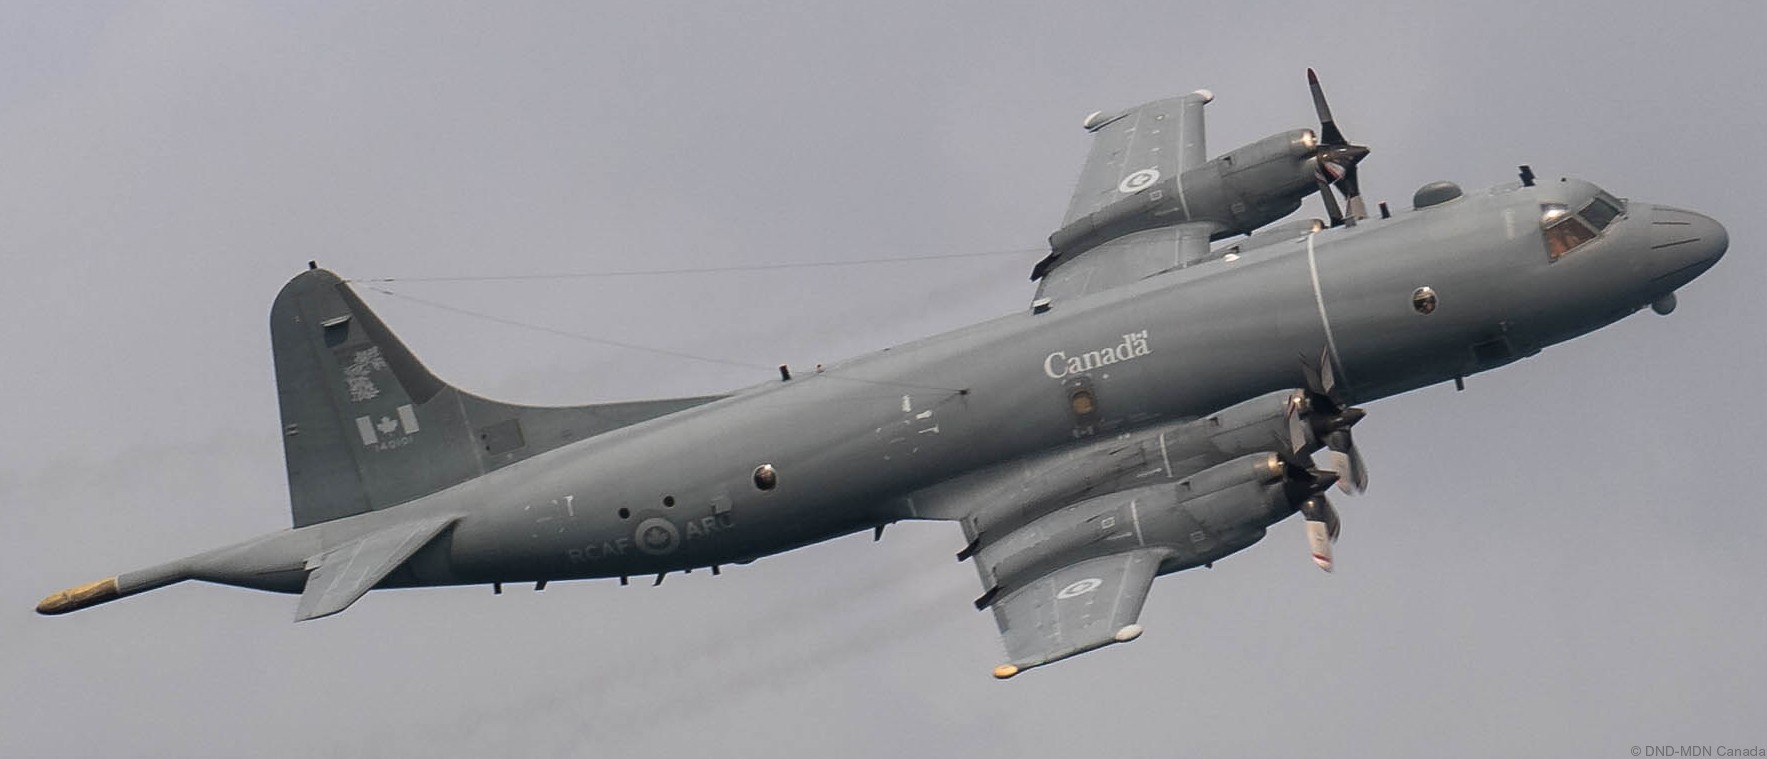 lockheed cp-140 aurora long range patrol maritime aircraft royal canadian navy air force rcaf orion 17